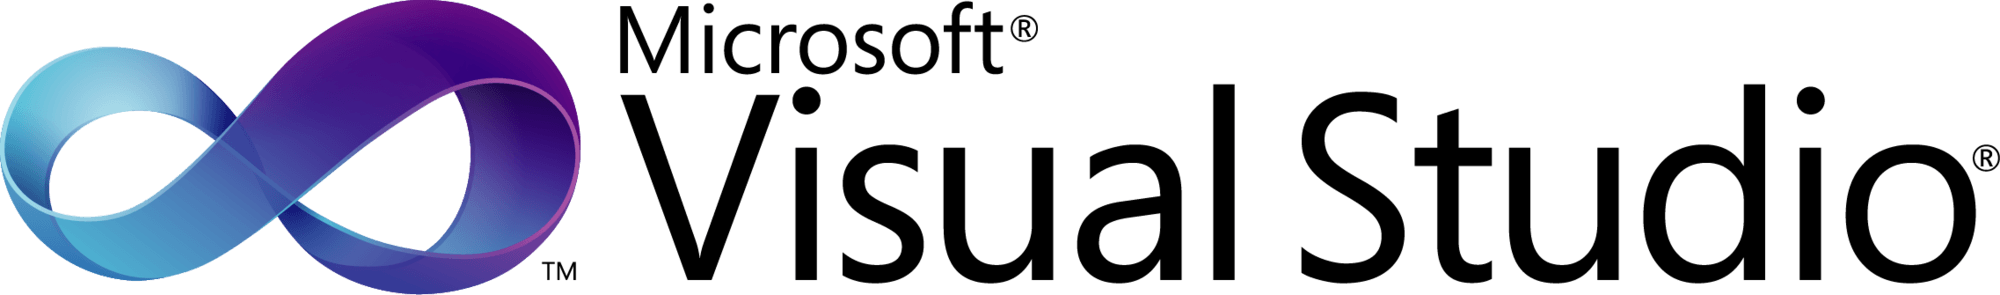 Visual Studio Logo - Microsoft Visual Studio | Logopedia | FANDOM powered by Wikia